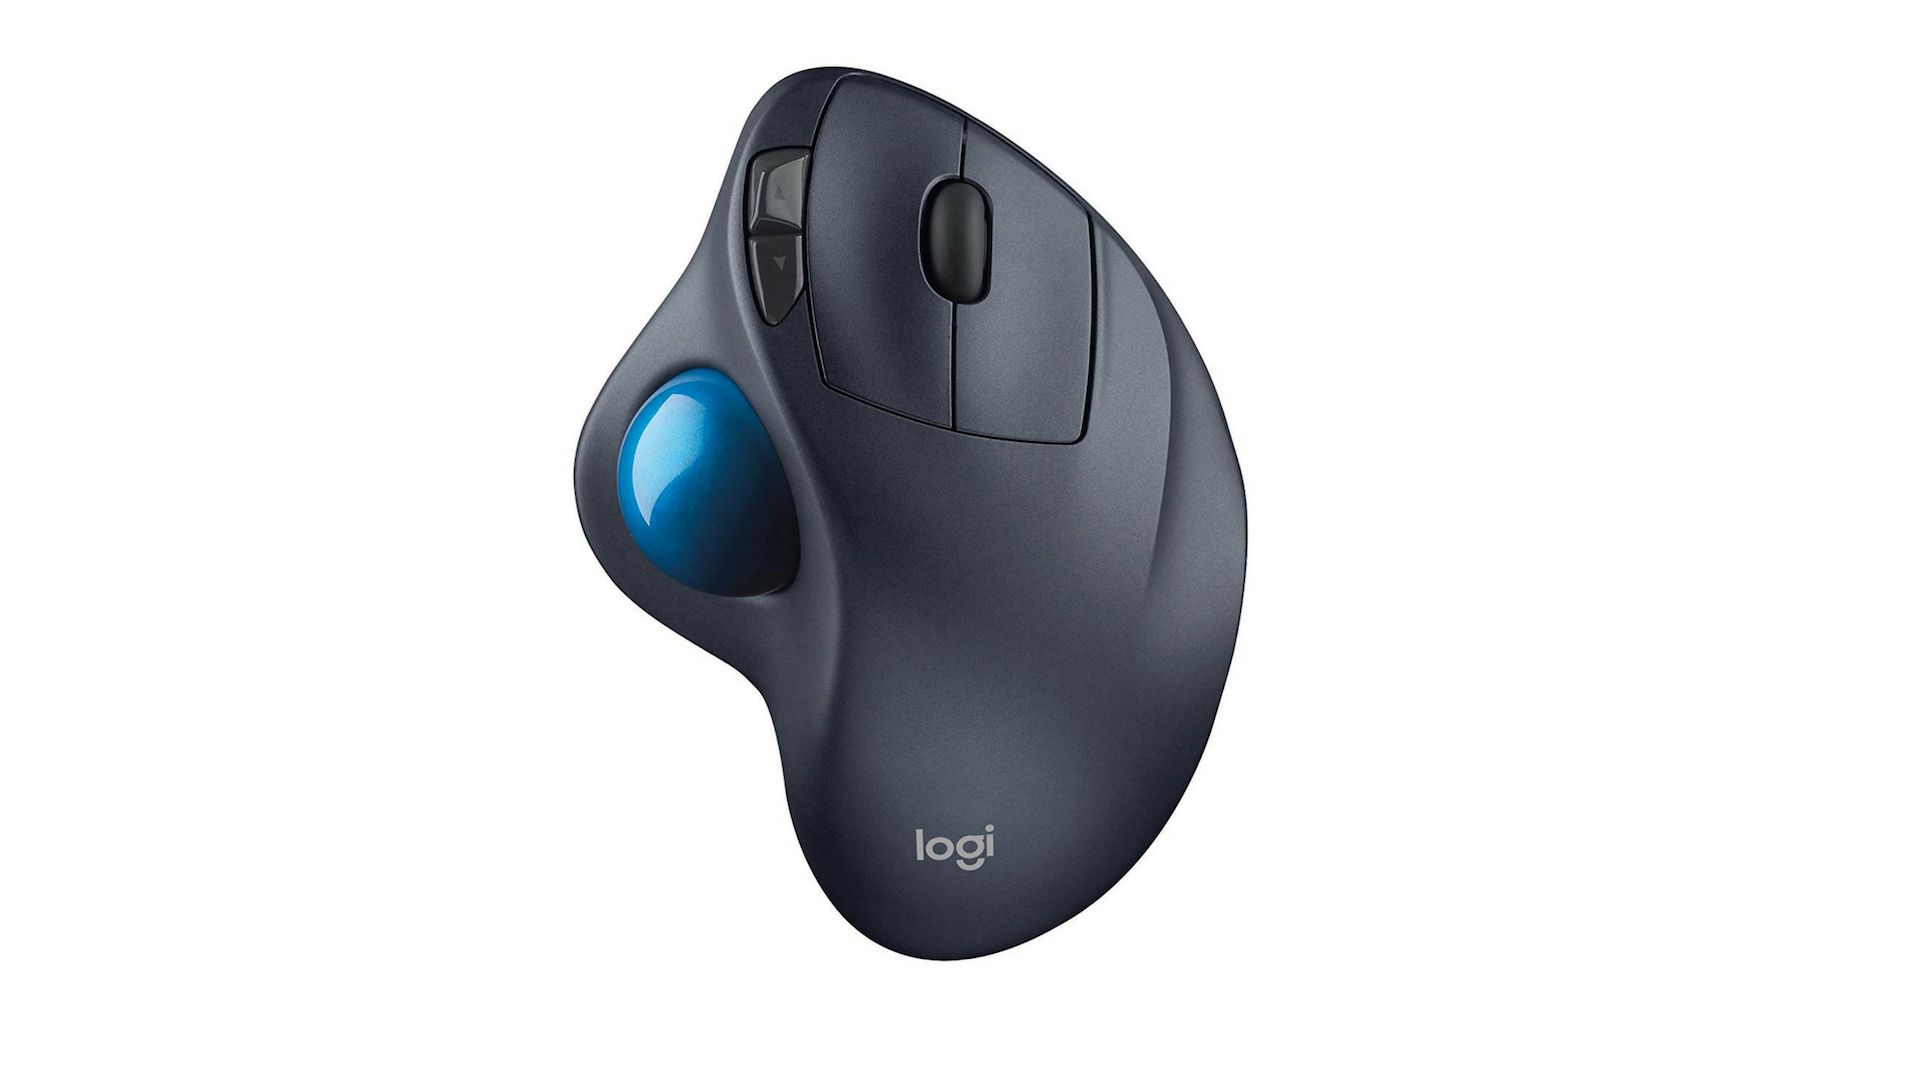 Logitech M570 trackball mouse